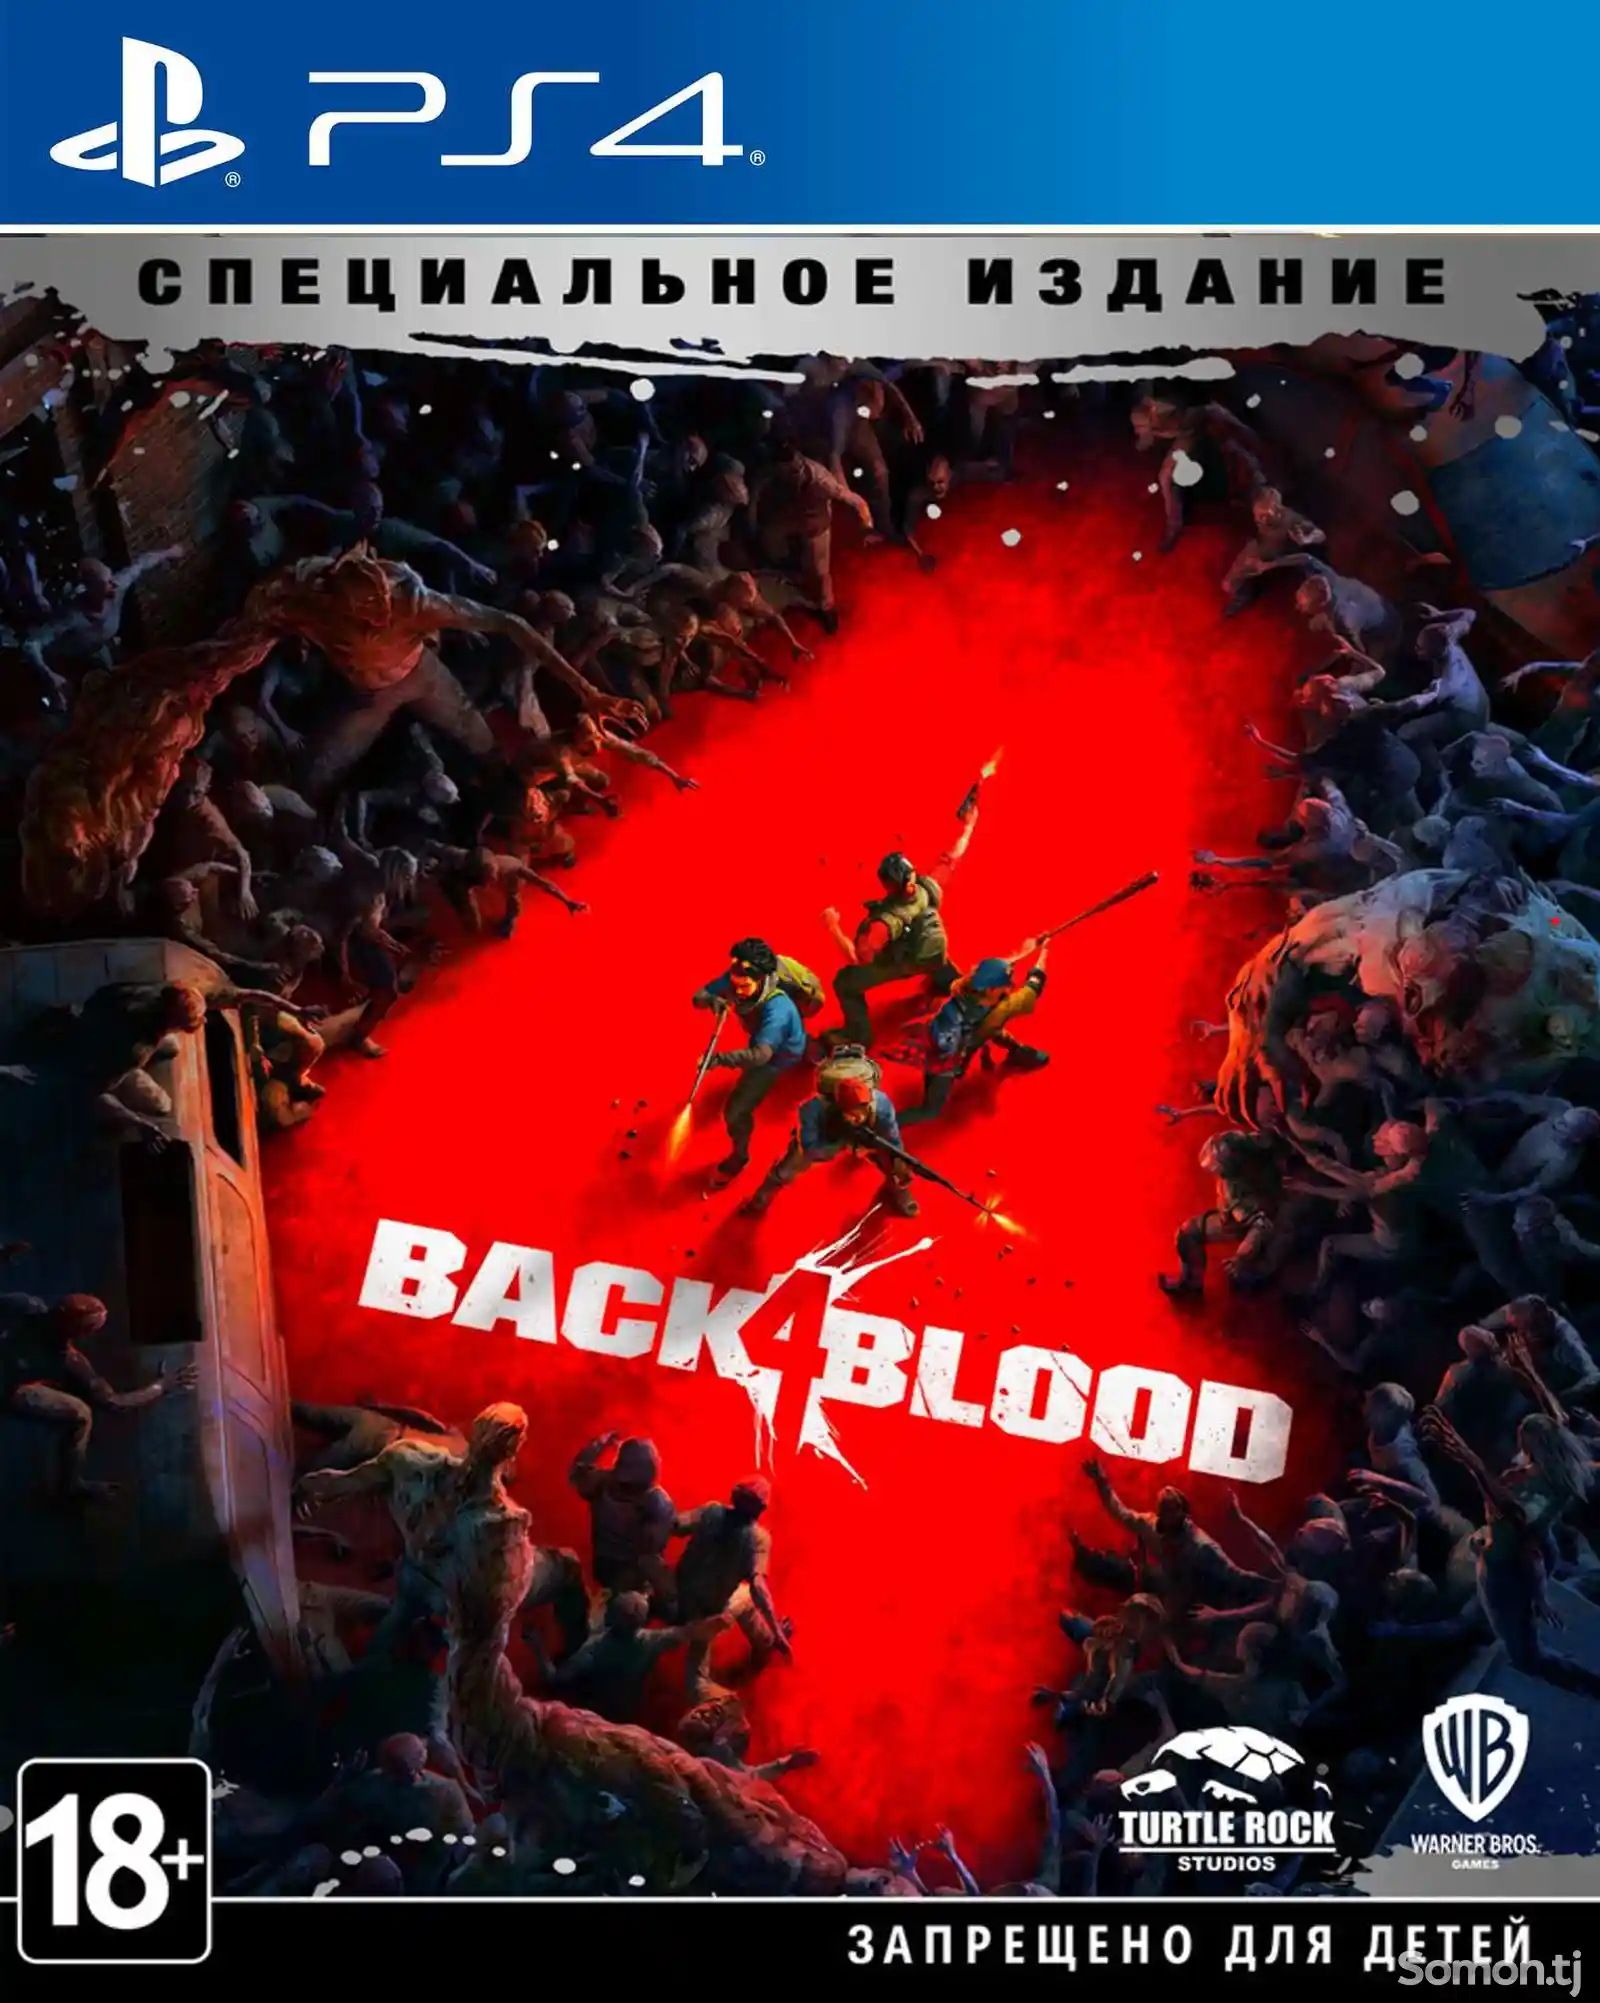 Игра Back 4 blood для PS-4 / 5.05 / 6.72 / 7.02 / 7.55 / 9.00 /-1